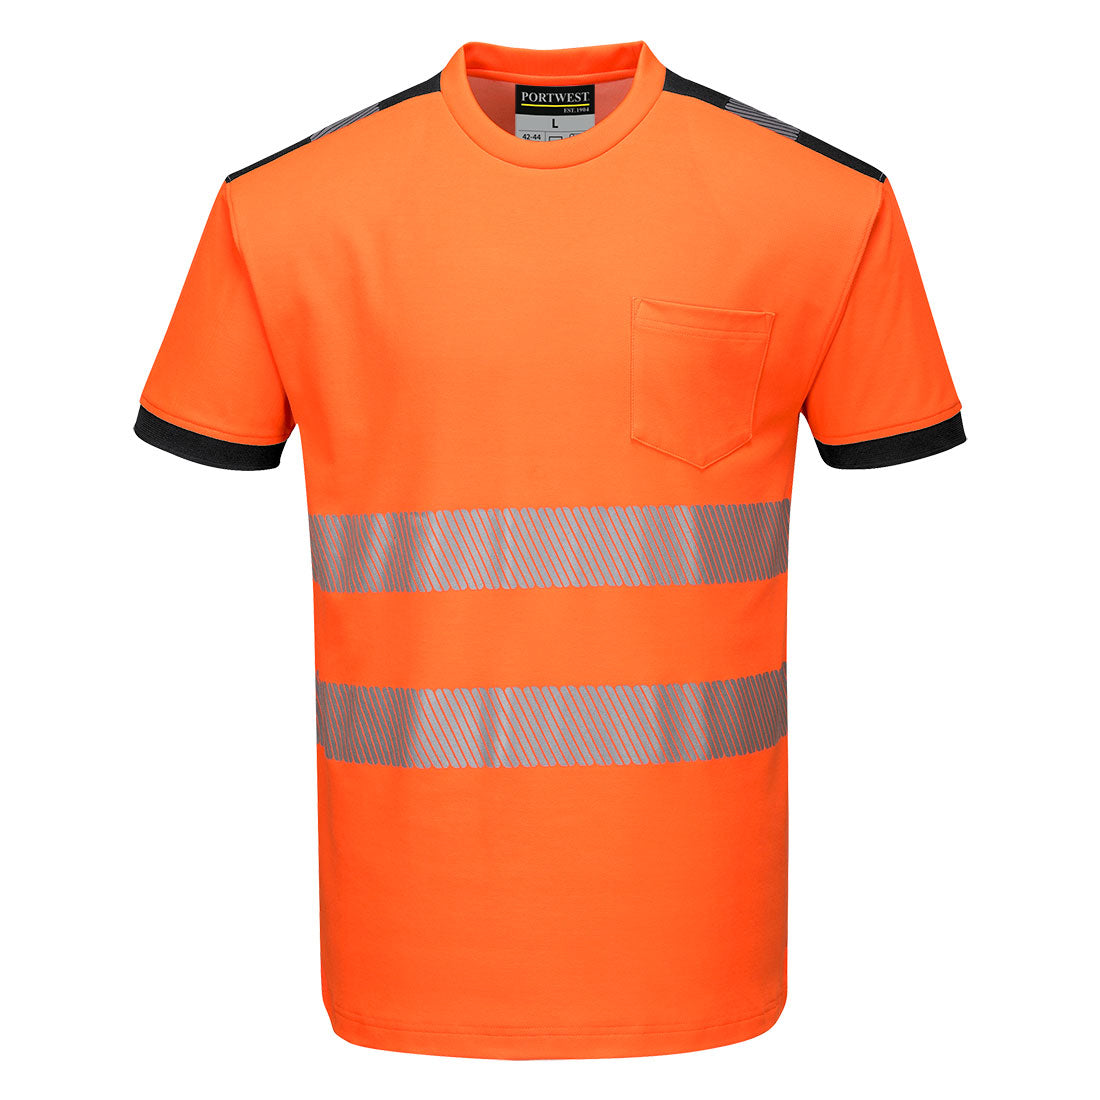 Portwest T181 - Orange/Black Sz 5XL PW3 Hi-Vis Short Sleeved T-Shirt Viz Visibilty